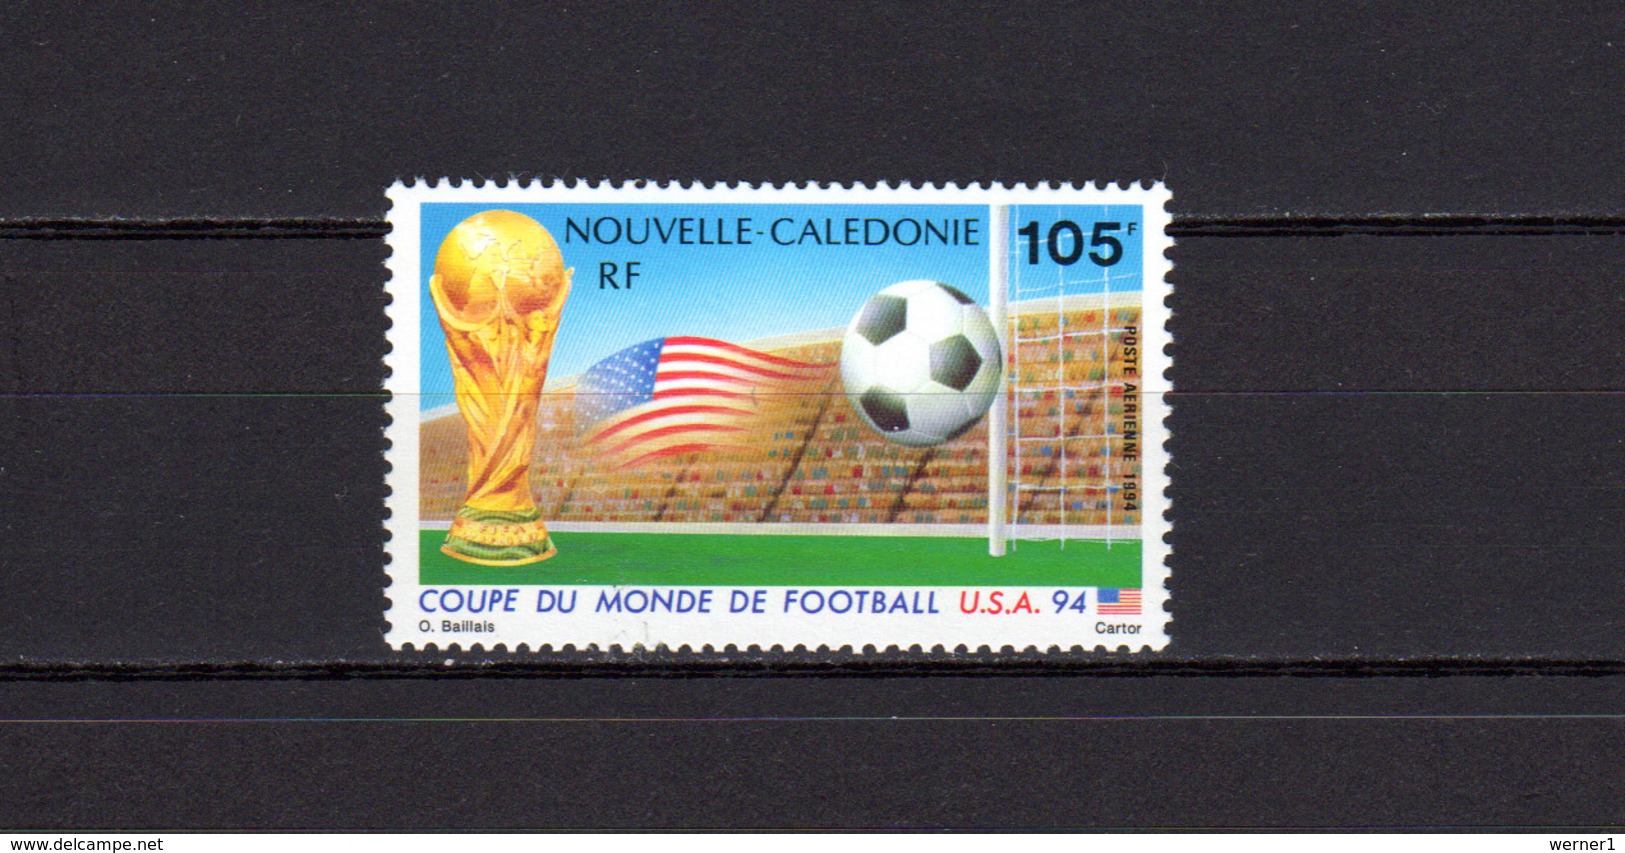 New Caledonia 1994 Football Soccer World Cup Stamp MNH - 1994 – USA